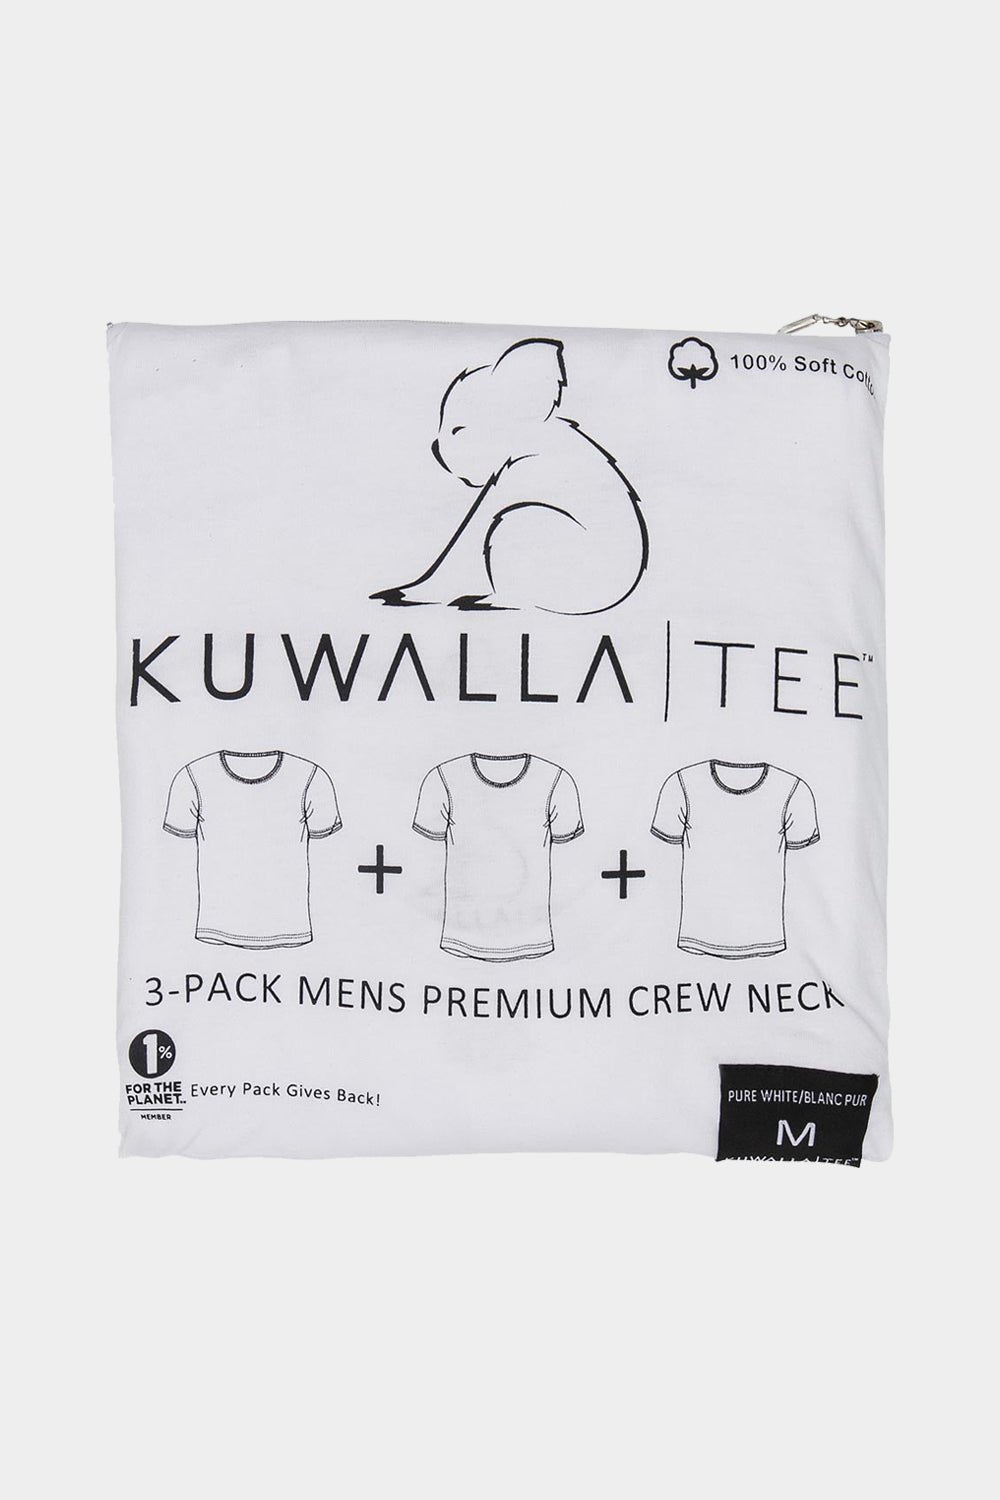 KUWALLA TEE wholesale products